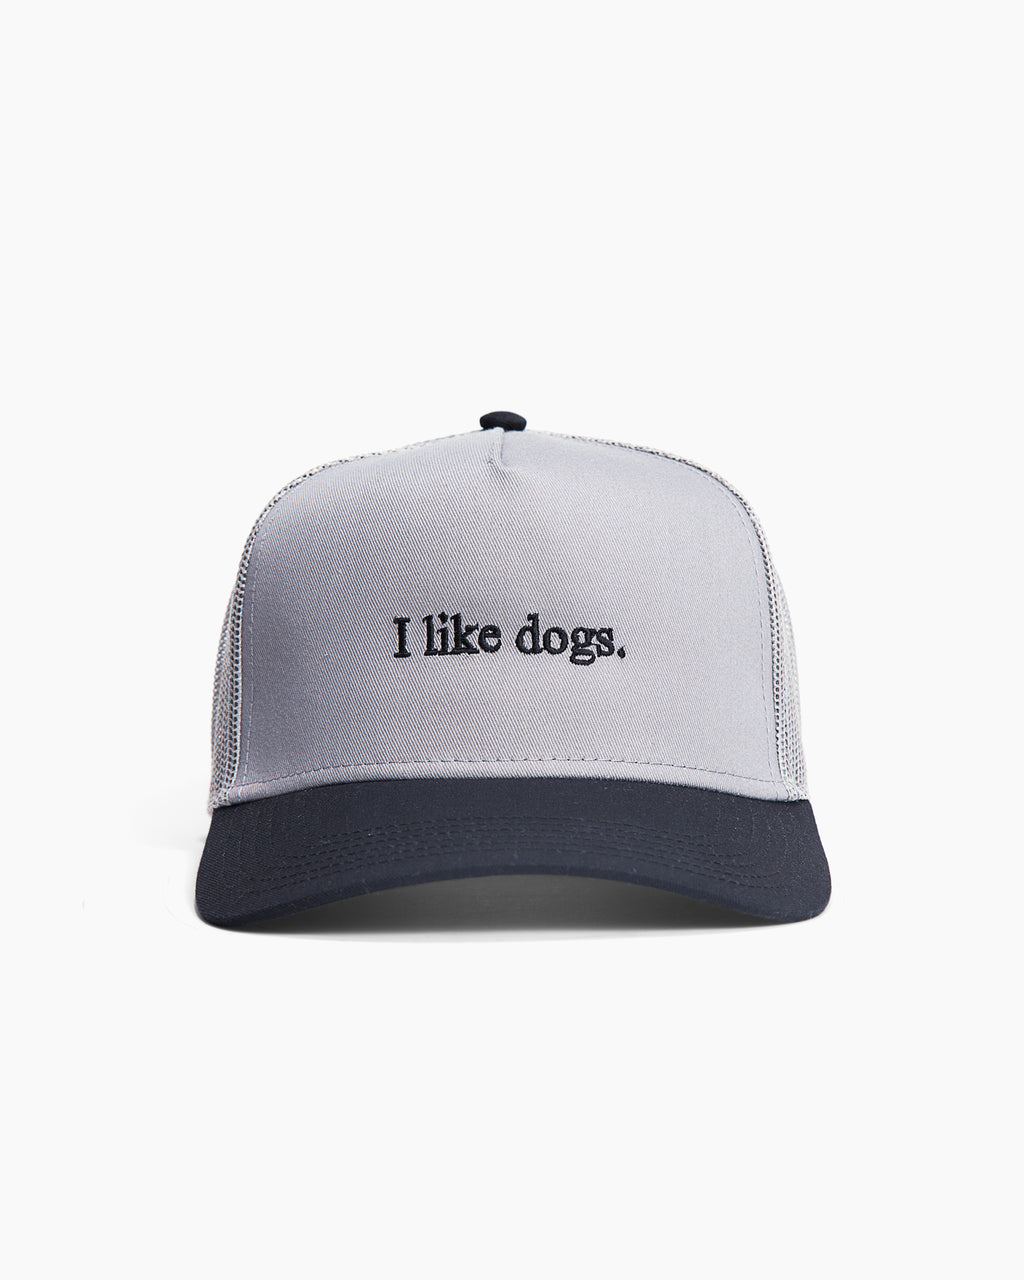 I like dogs. | Trucker Hat | Gray & Black